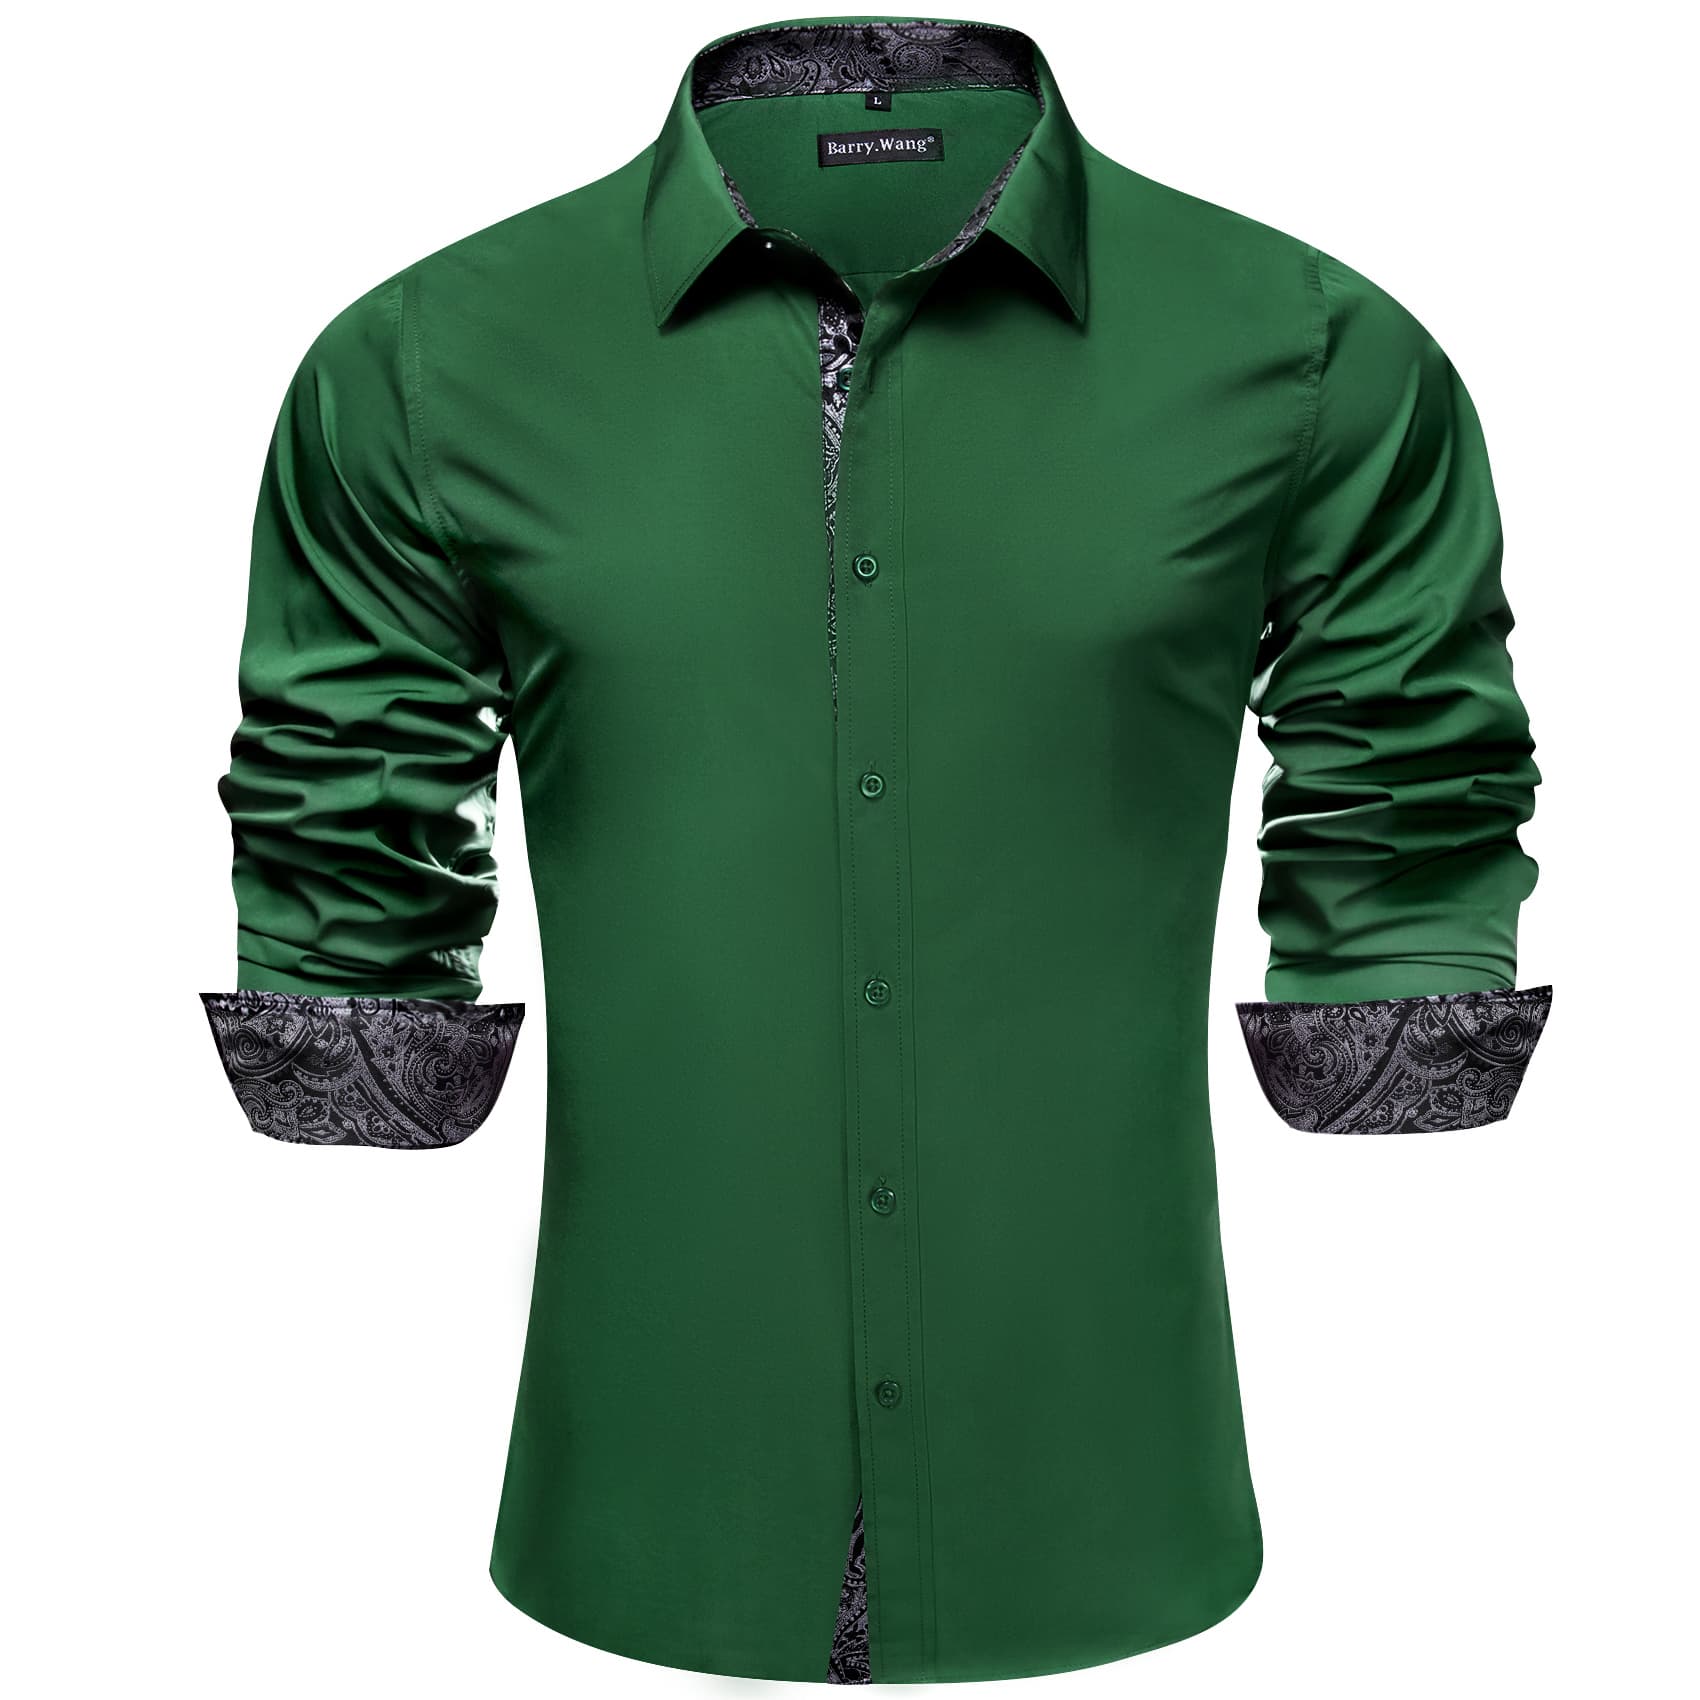 Barry Wang Dark Green Shirts Long Sleeve Grey Cuff Patchwork Shirt Top